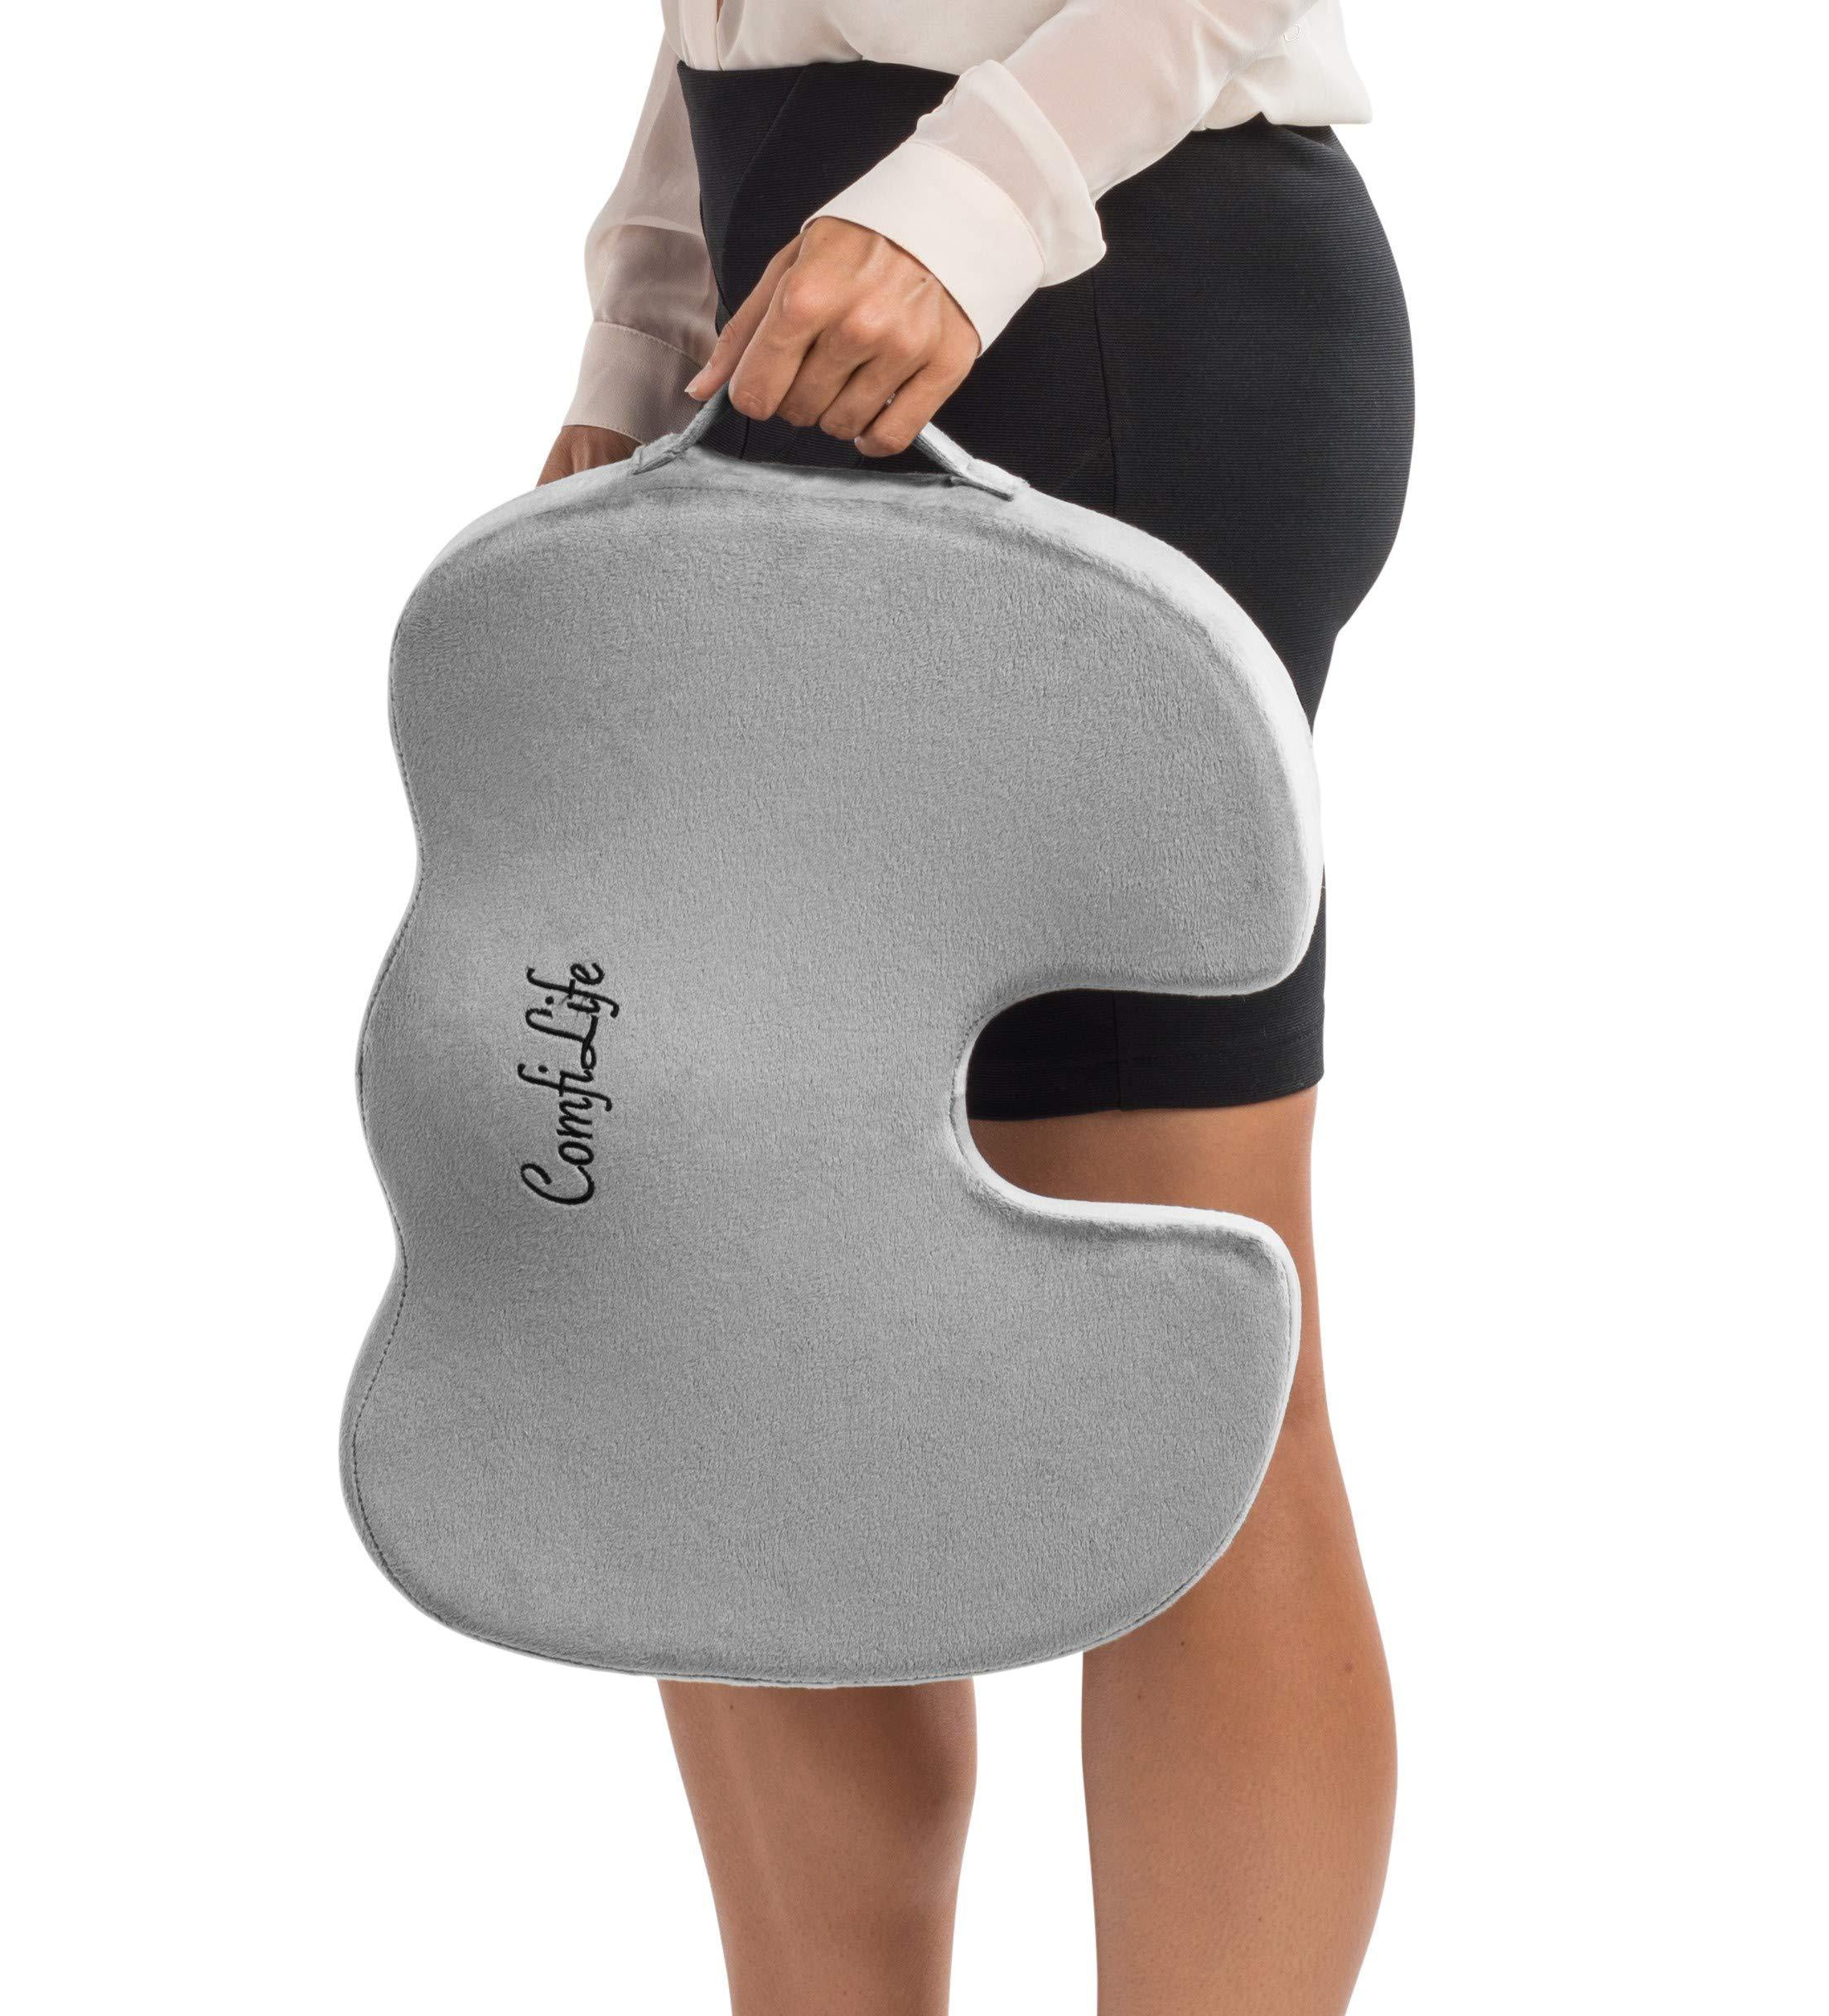 Comfy Life Seat Cushions, (Seat Cushion+Chair Cushion) Hip and Waist  Protection, Detachable Zip, Breathable Memory Foam,Anti Stress, Chair  Cushions